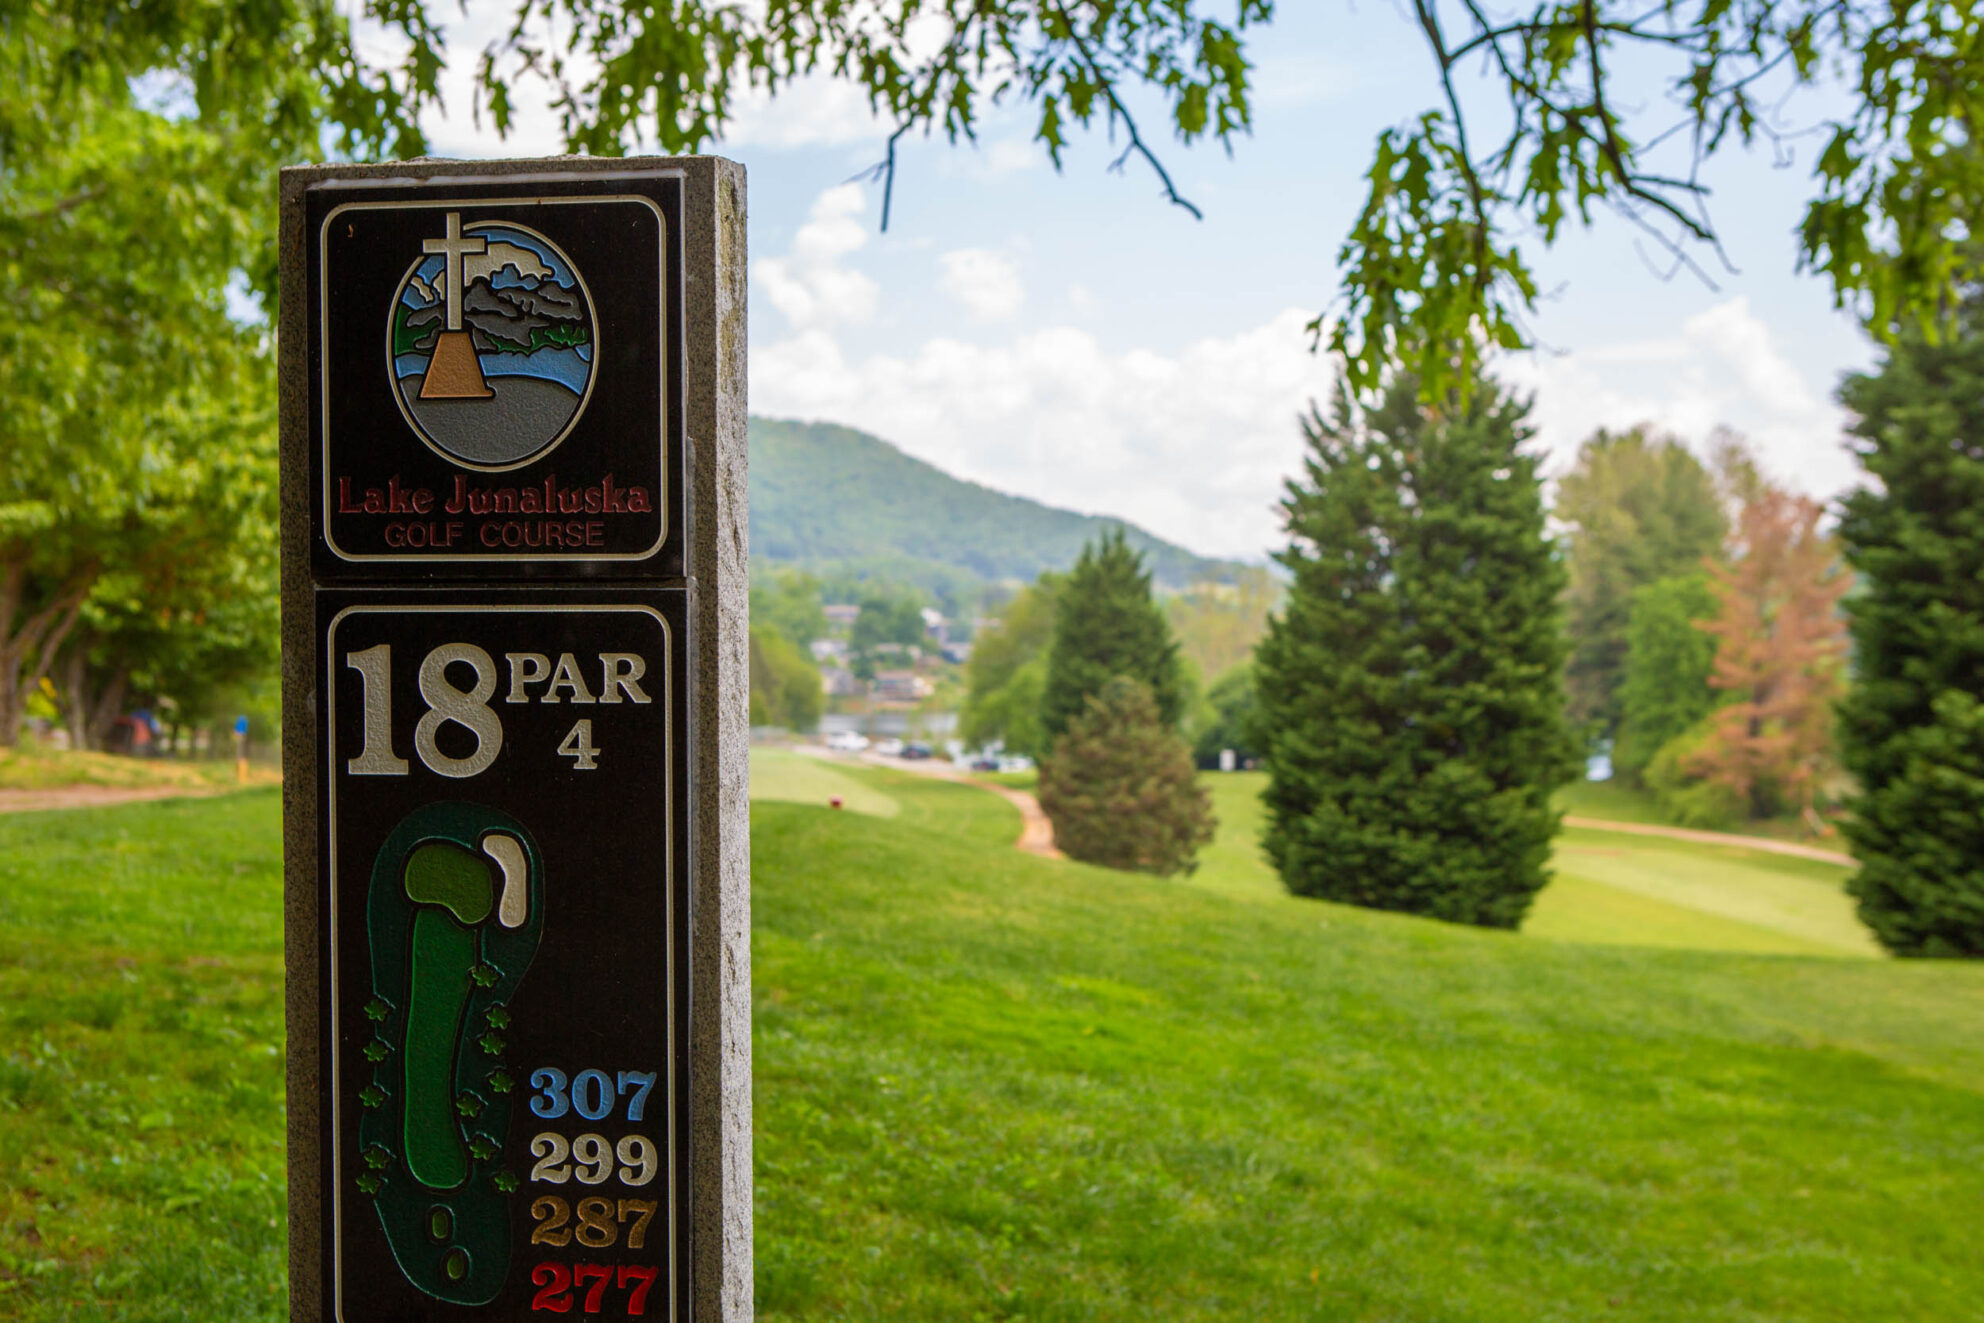 Lake Junaluska Golf Course - 18th hole sign